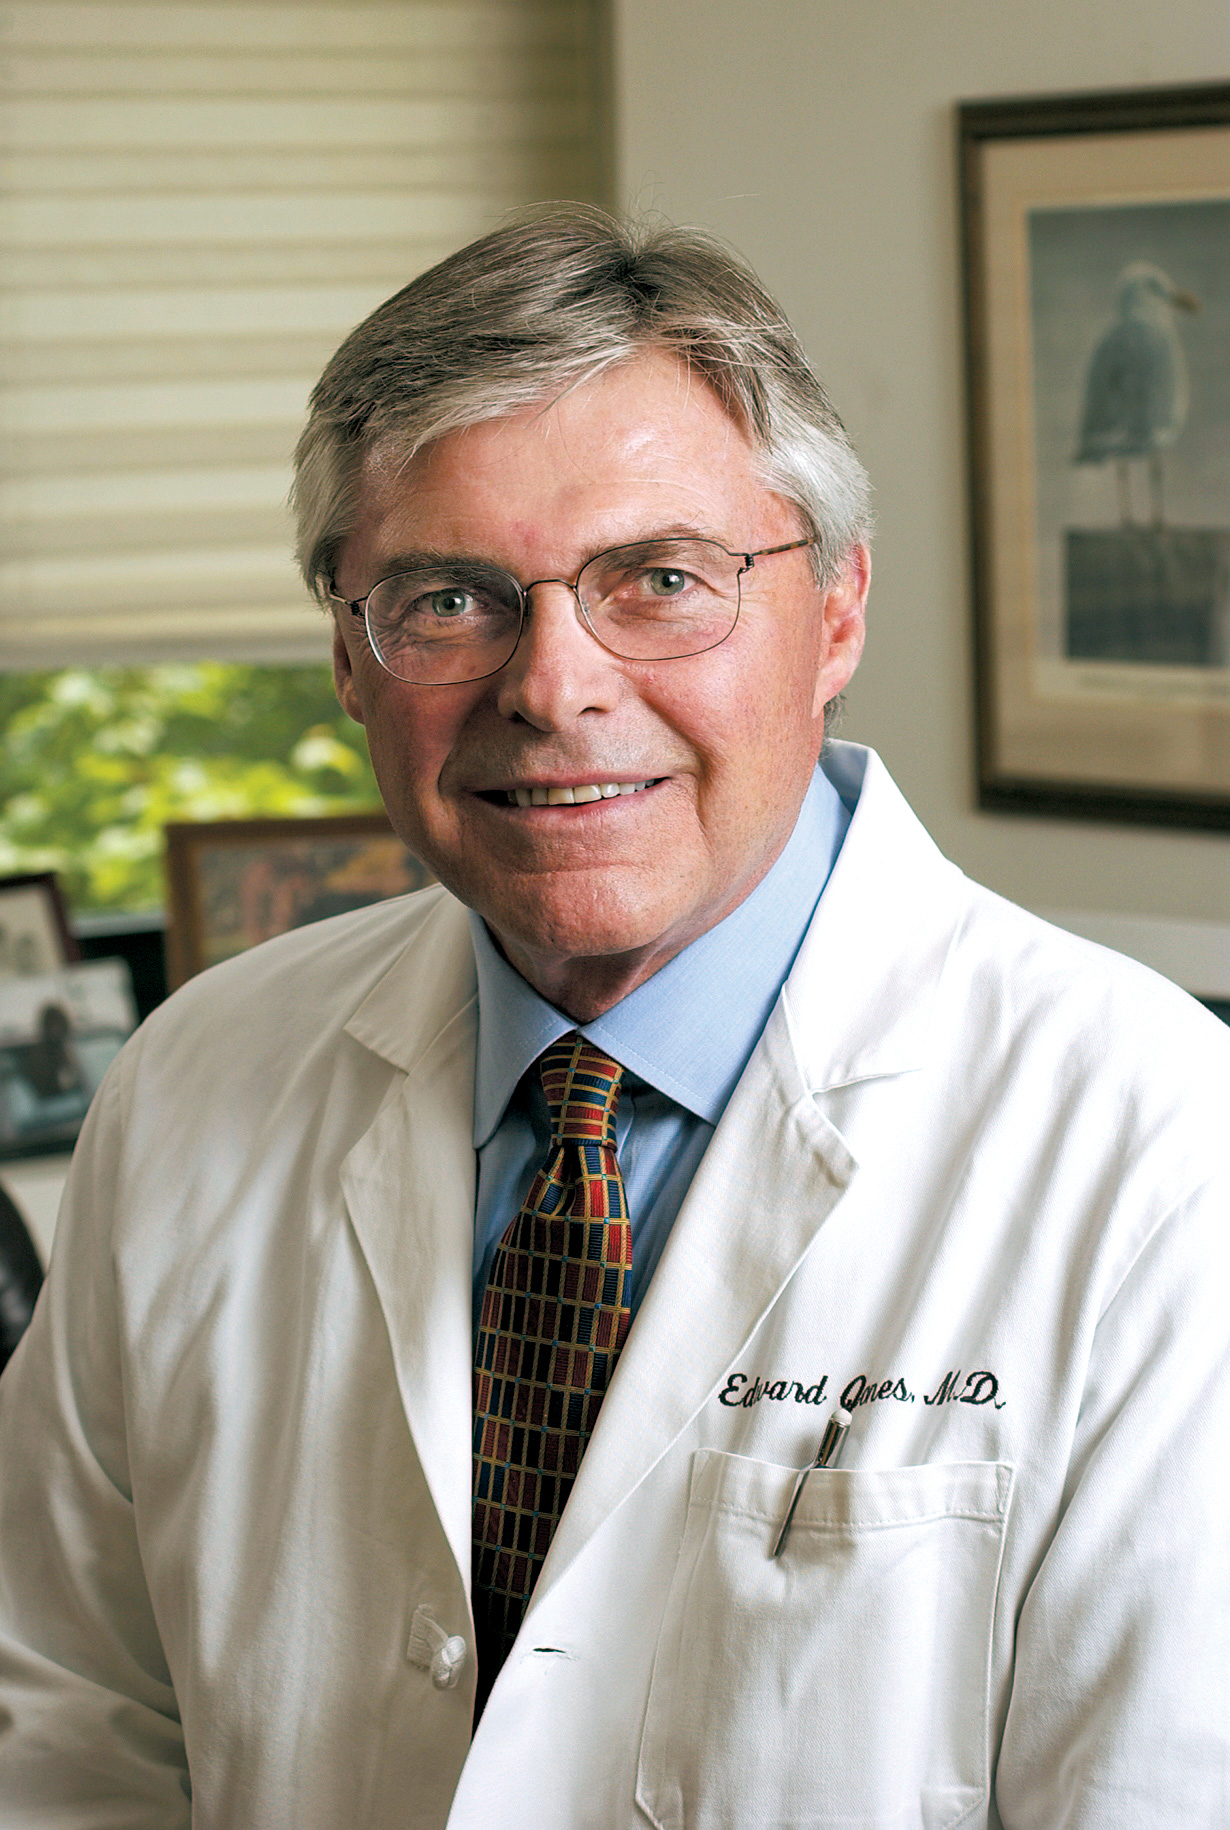 Image of Dr. Edward C. Jones.